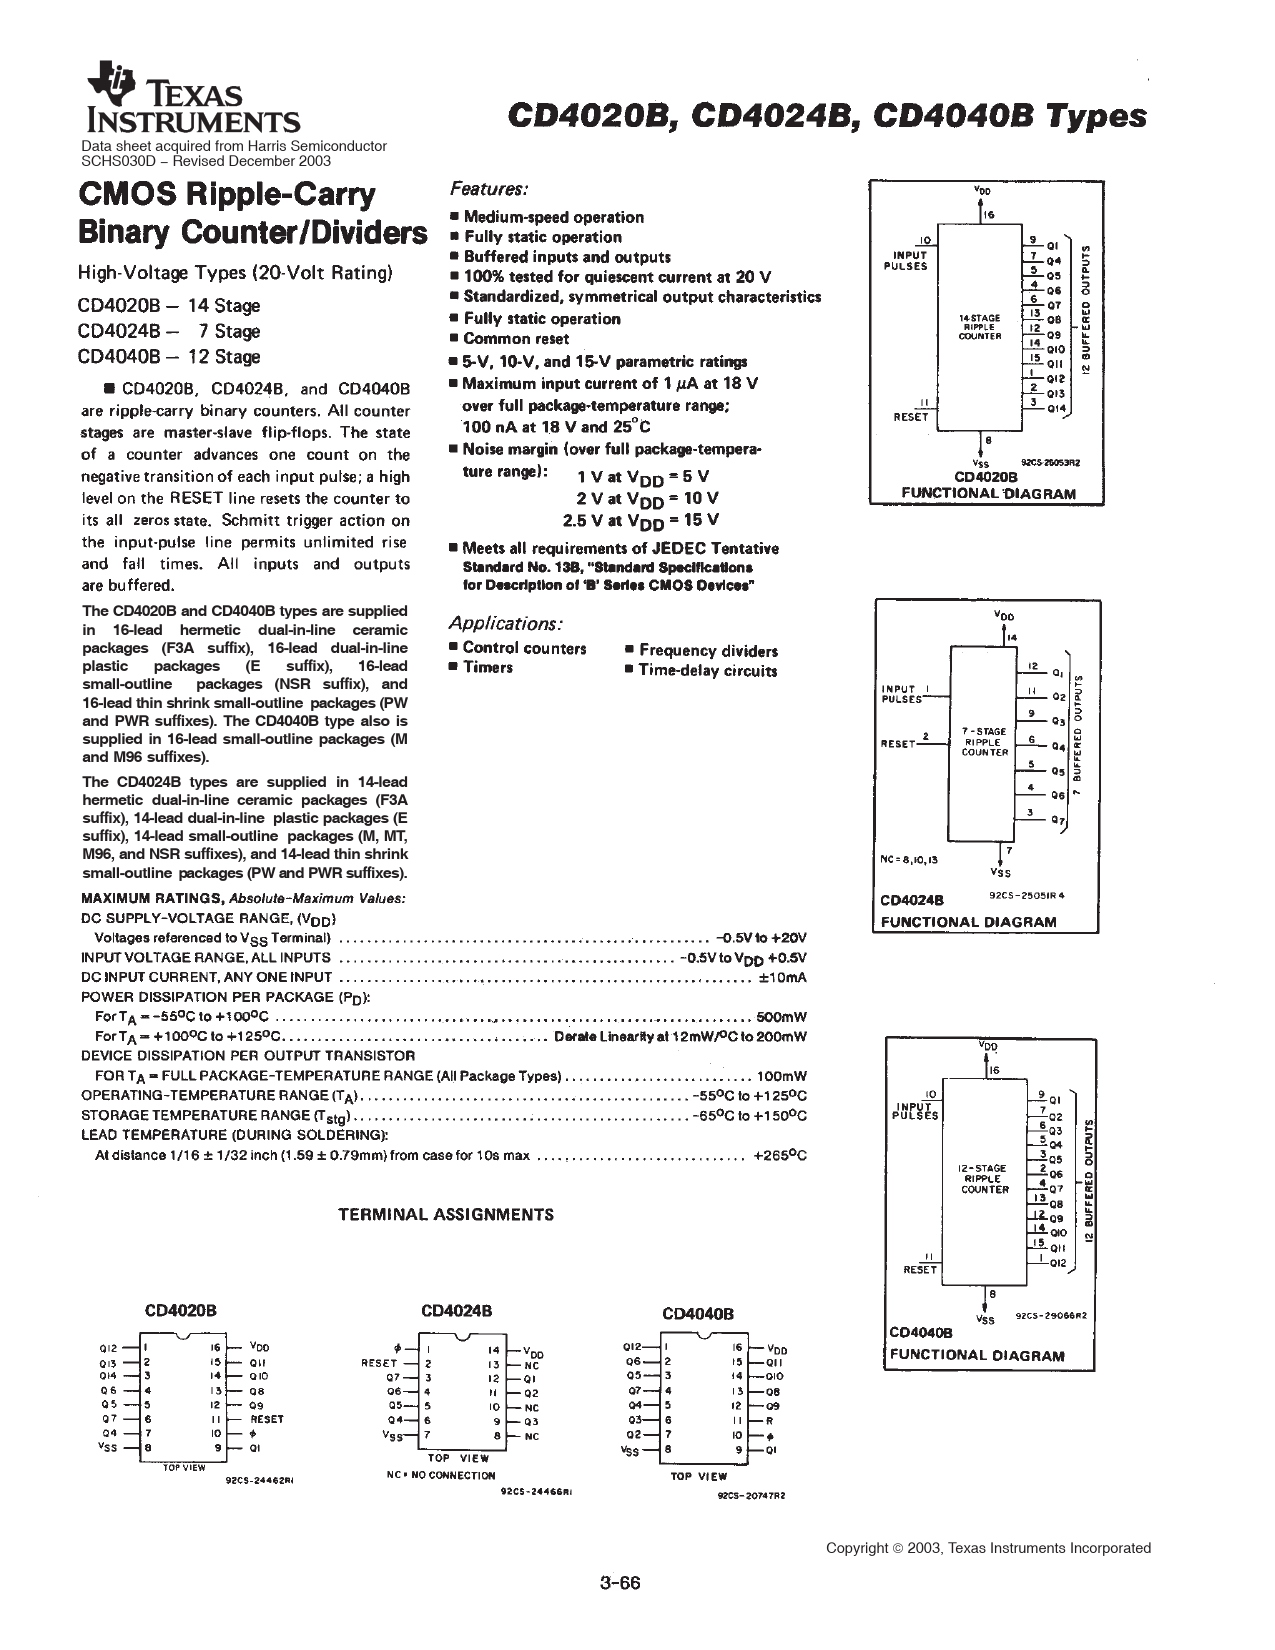 Datasheet CD4020B, CD4024B, CD4040B Texas Instruments, Revision: D